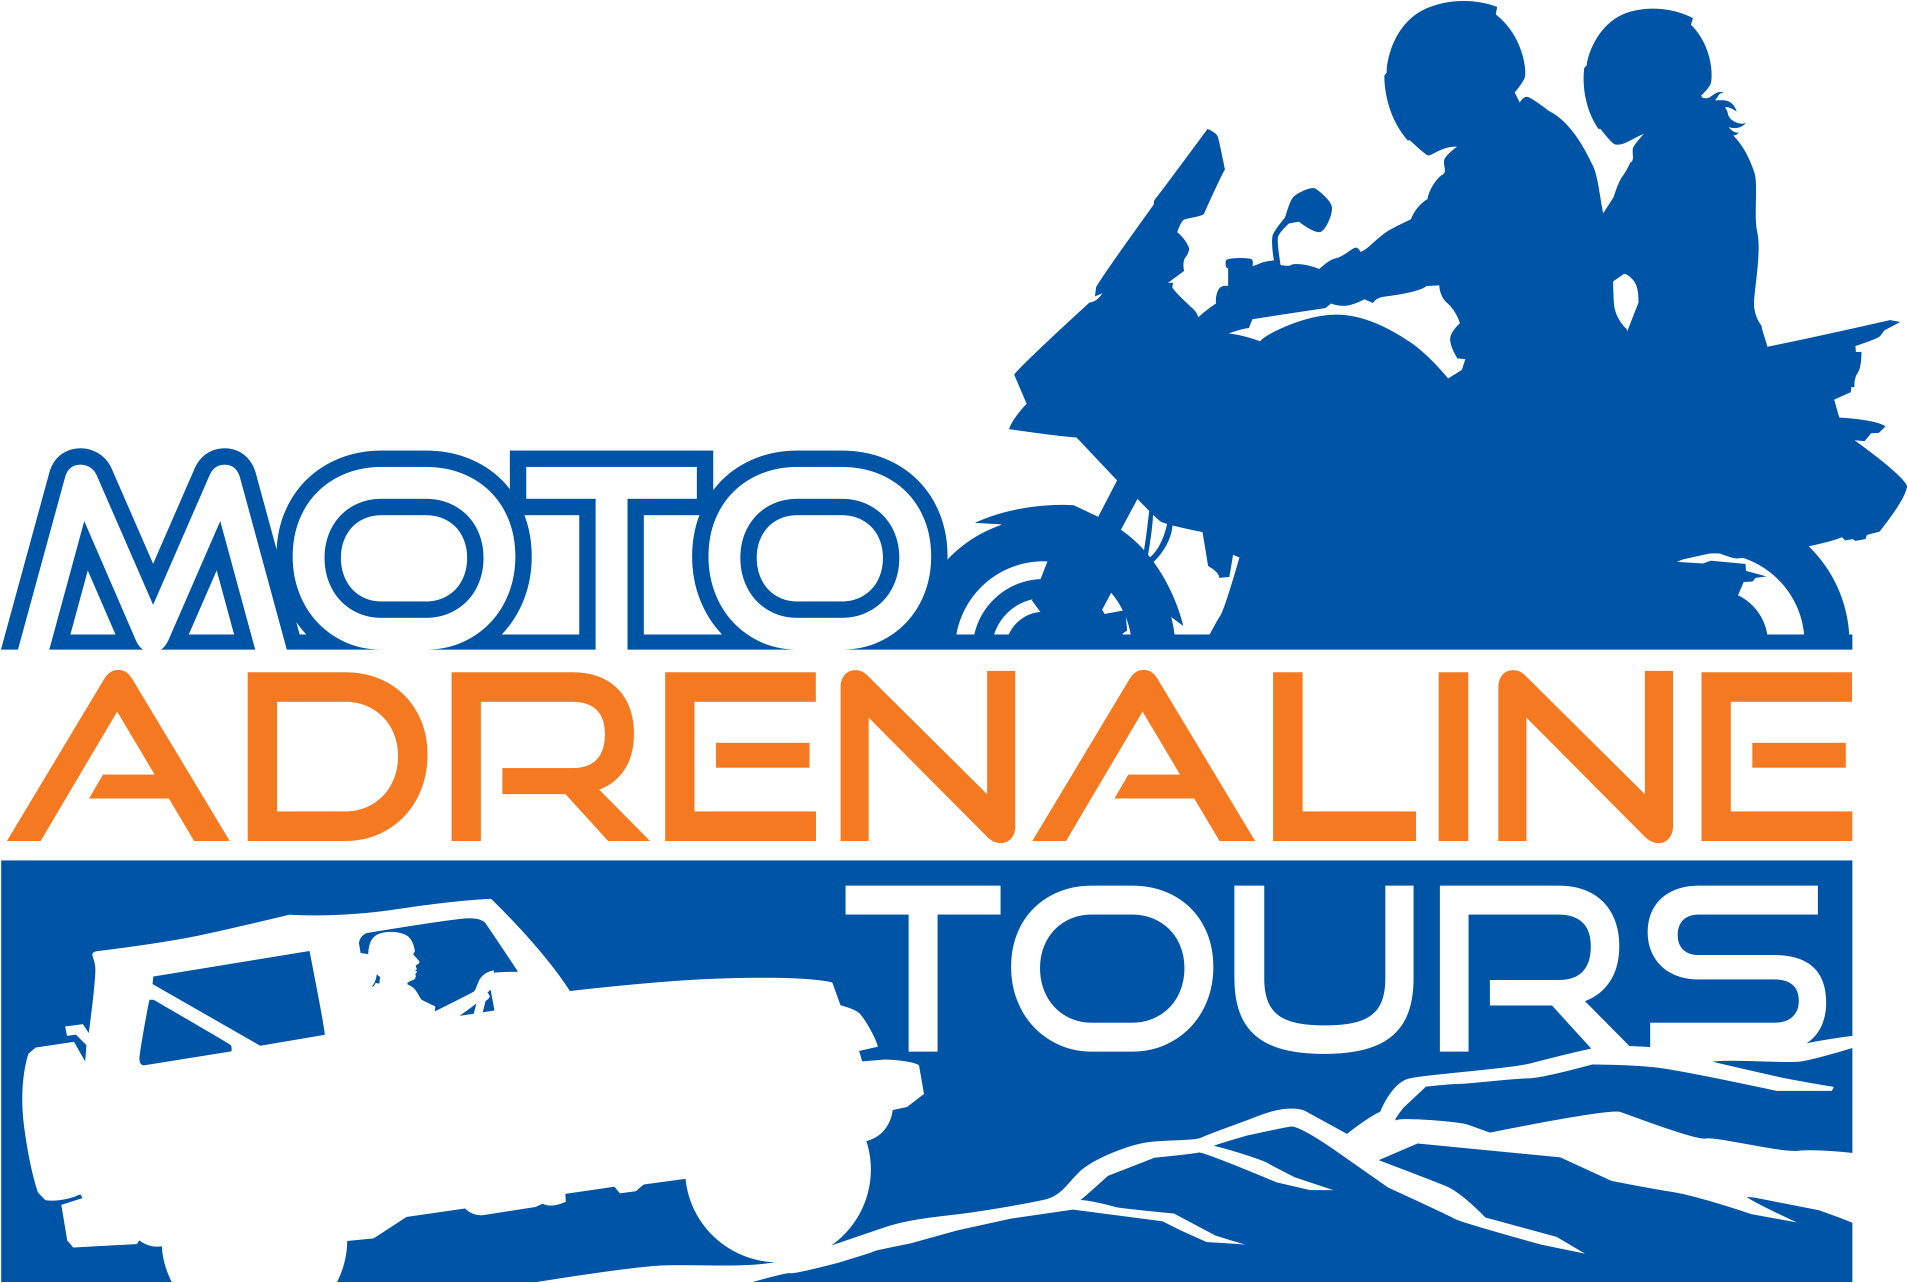 www.motoadrenalinetours.com